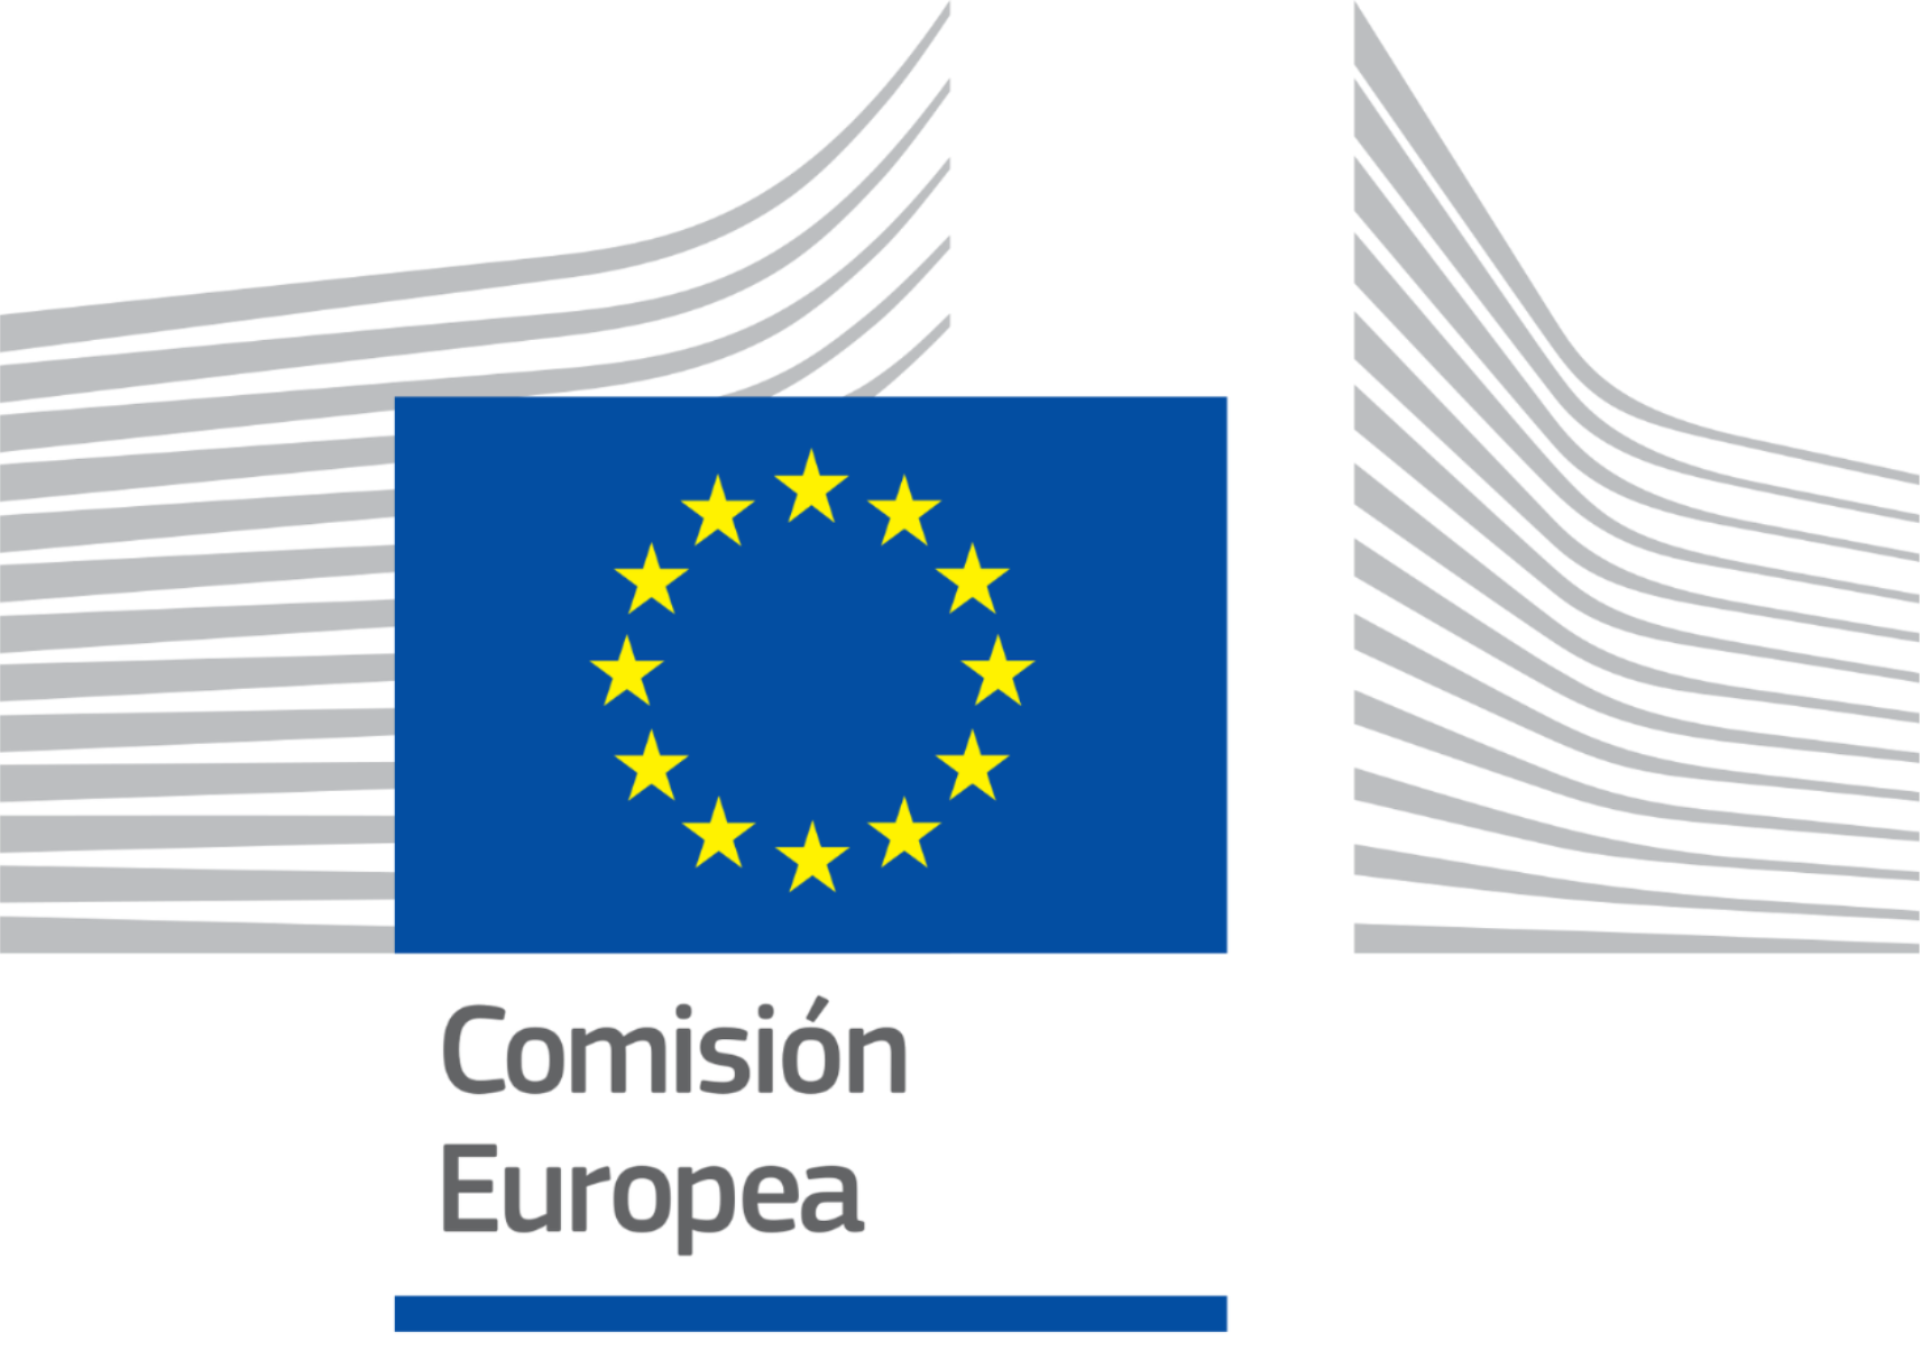 Comision_Europea_Logo.png